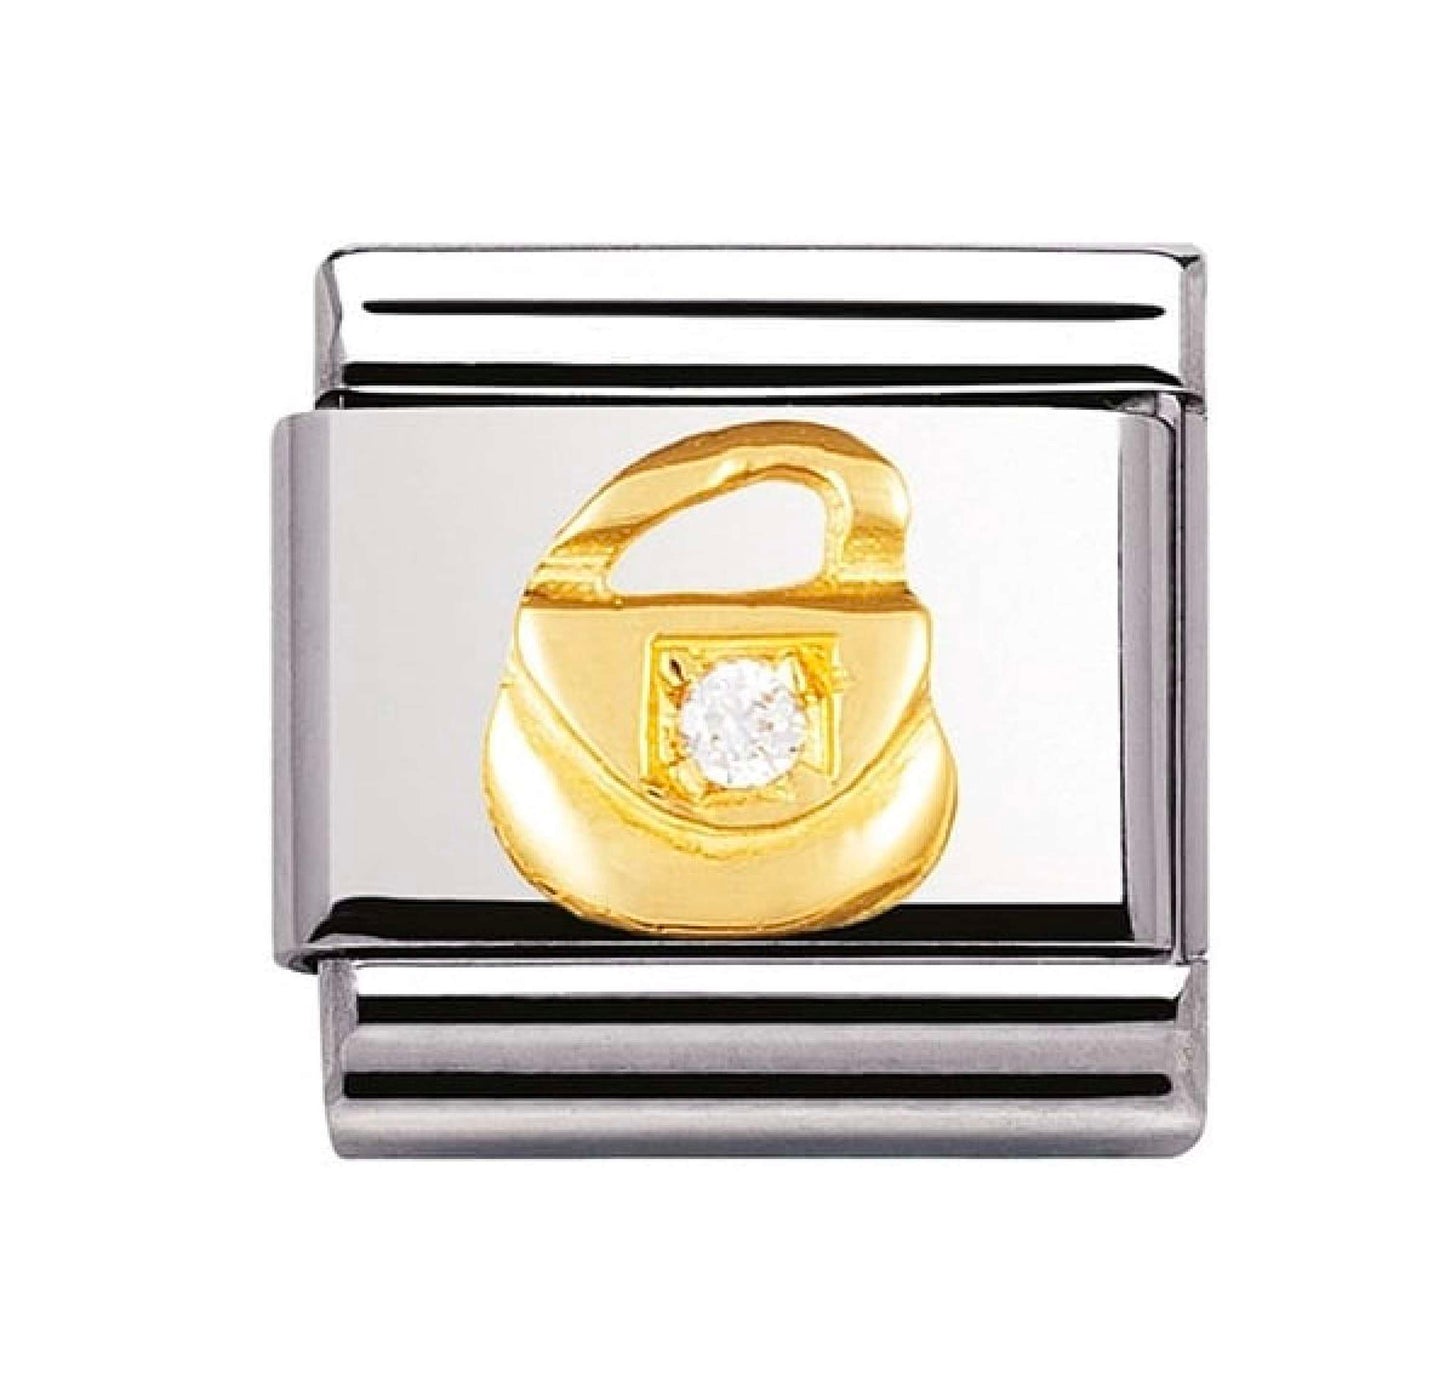 NOMINATION Gold Handbag CZ Charm